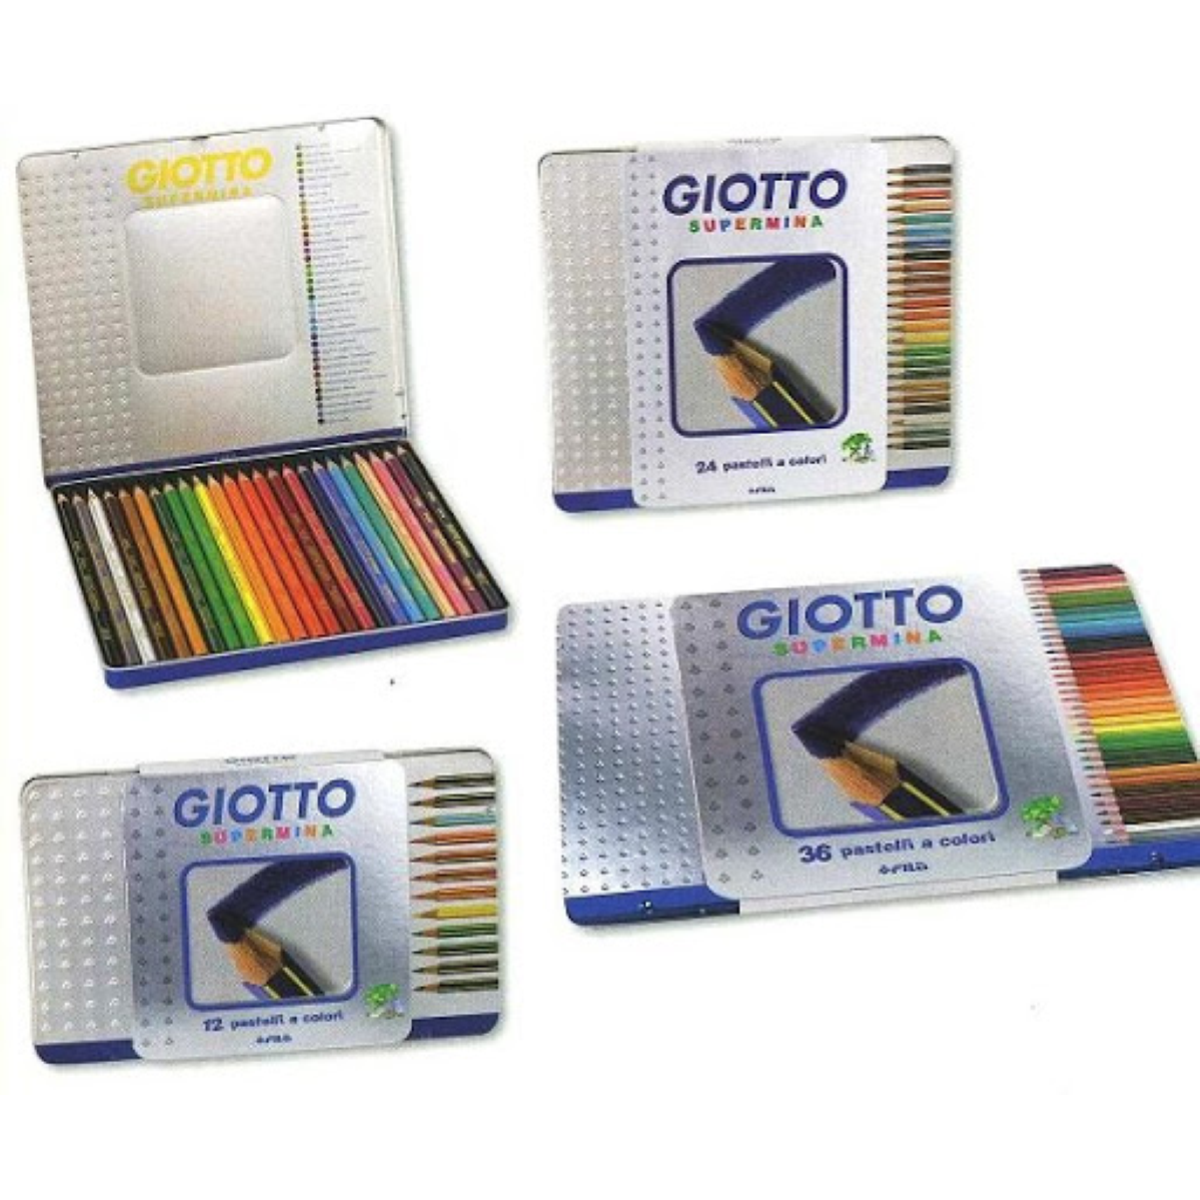 Pastelli - Giotto Supermina - 36 matite con mina da 3,8 mm - Cartolibreria  Gianna